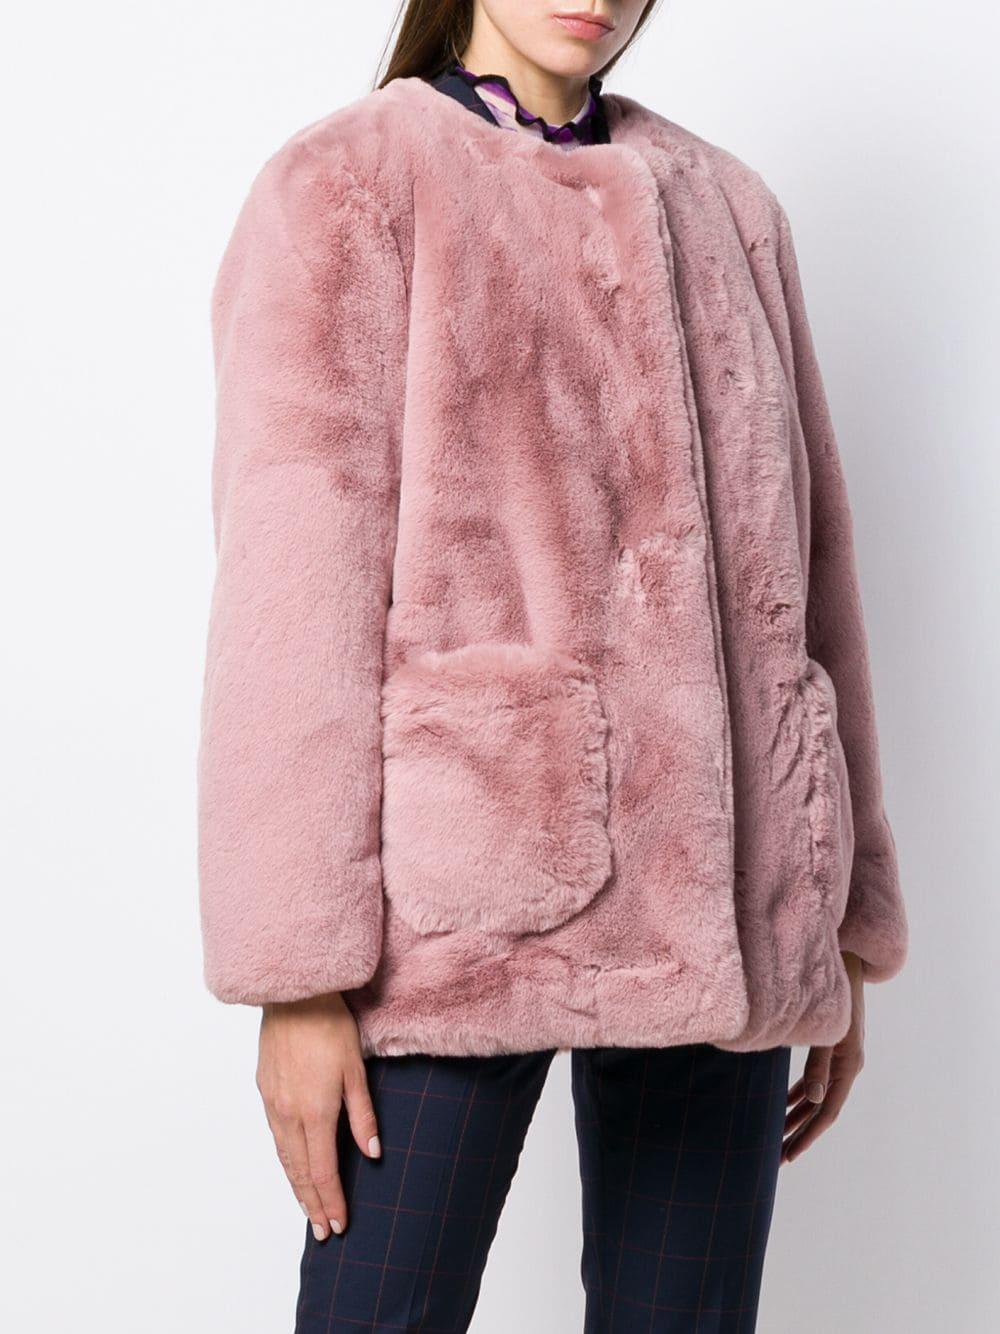 Apparis Jessica Faux Fur Coat in Pink - Lyst